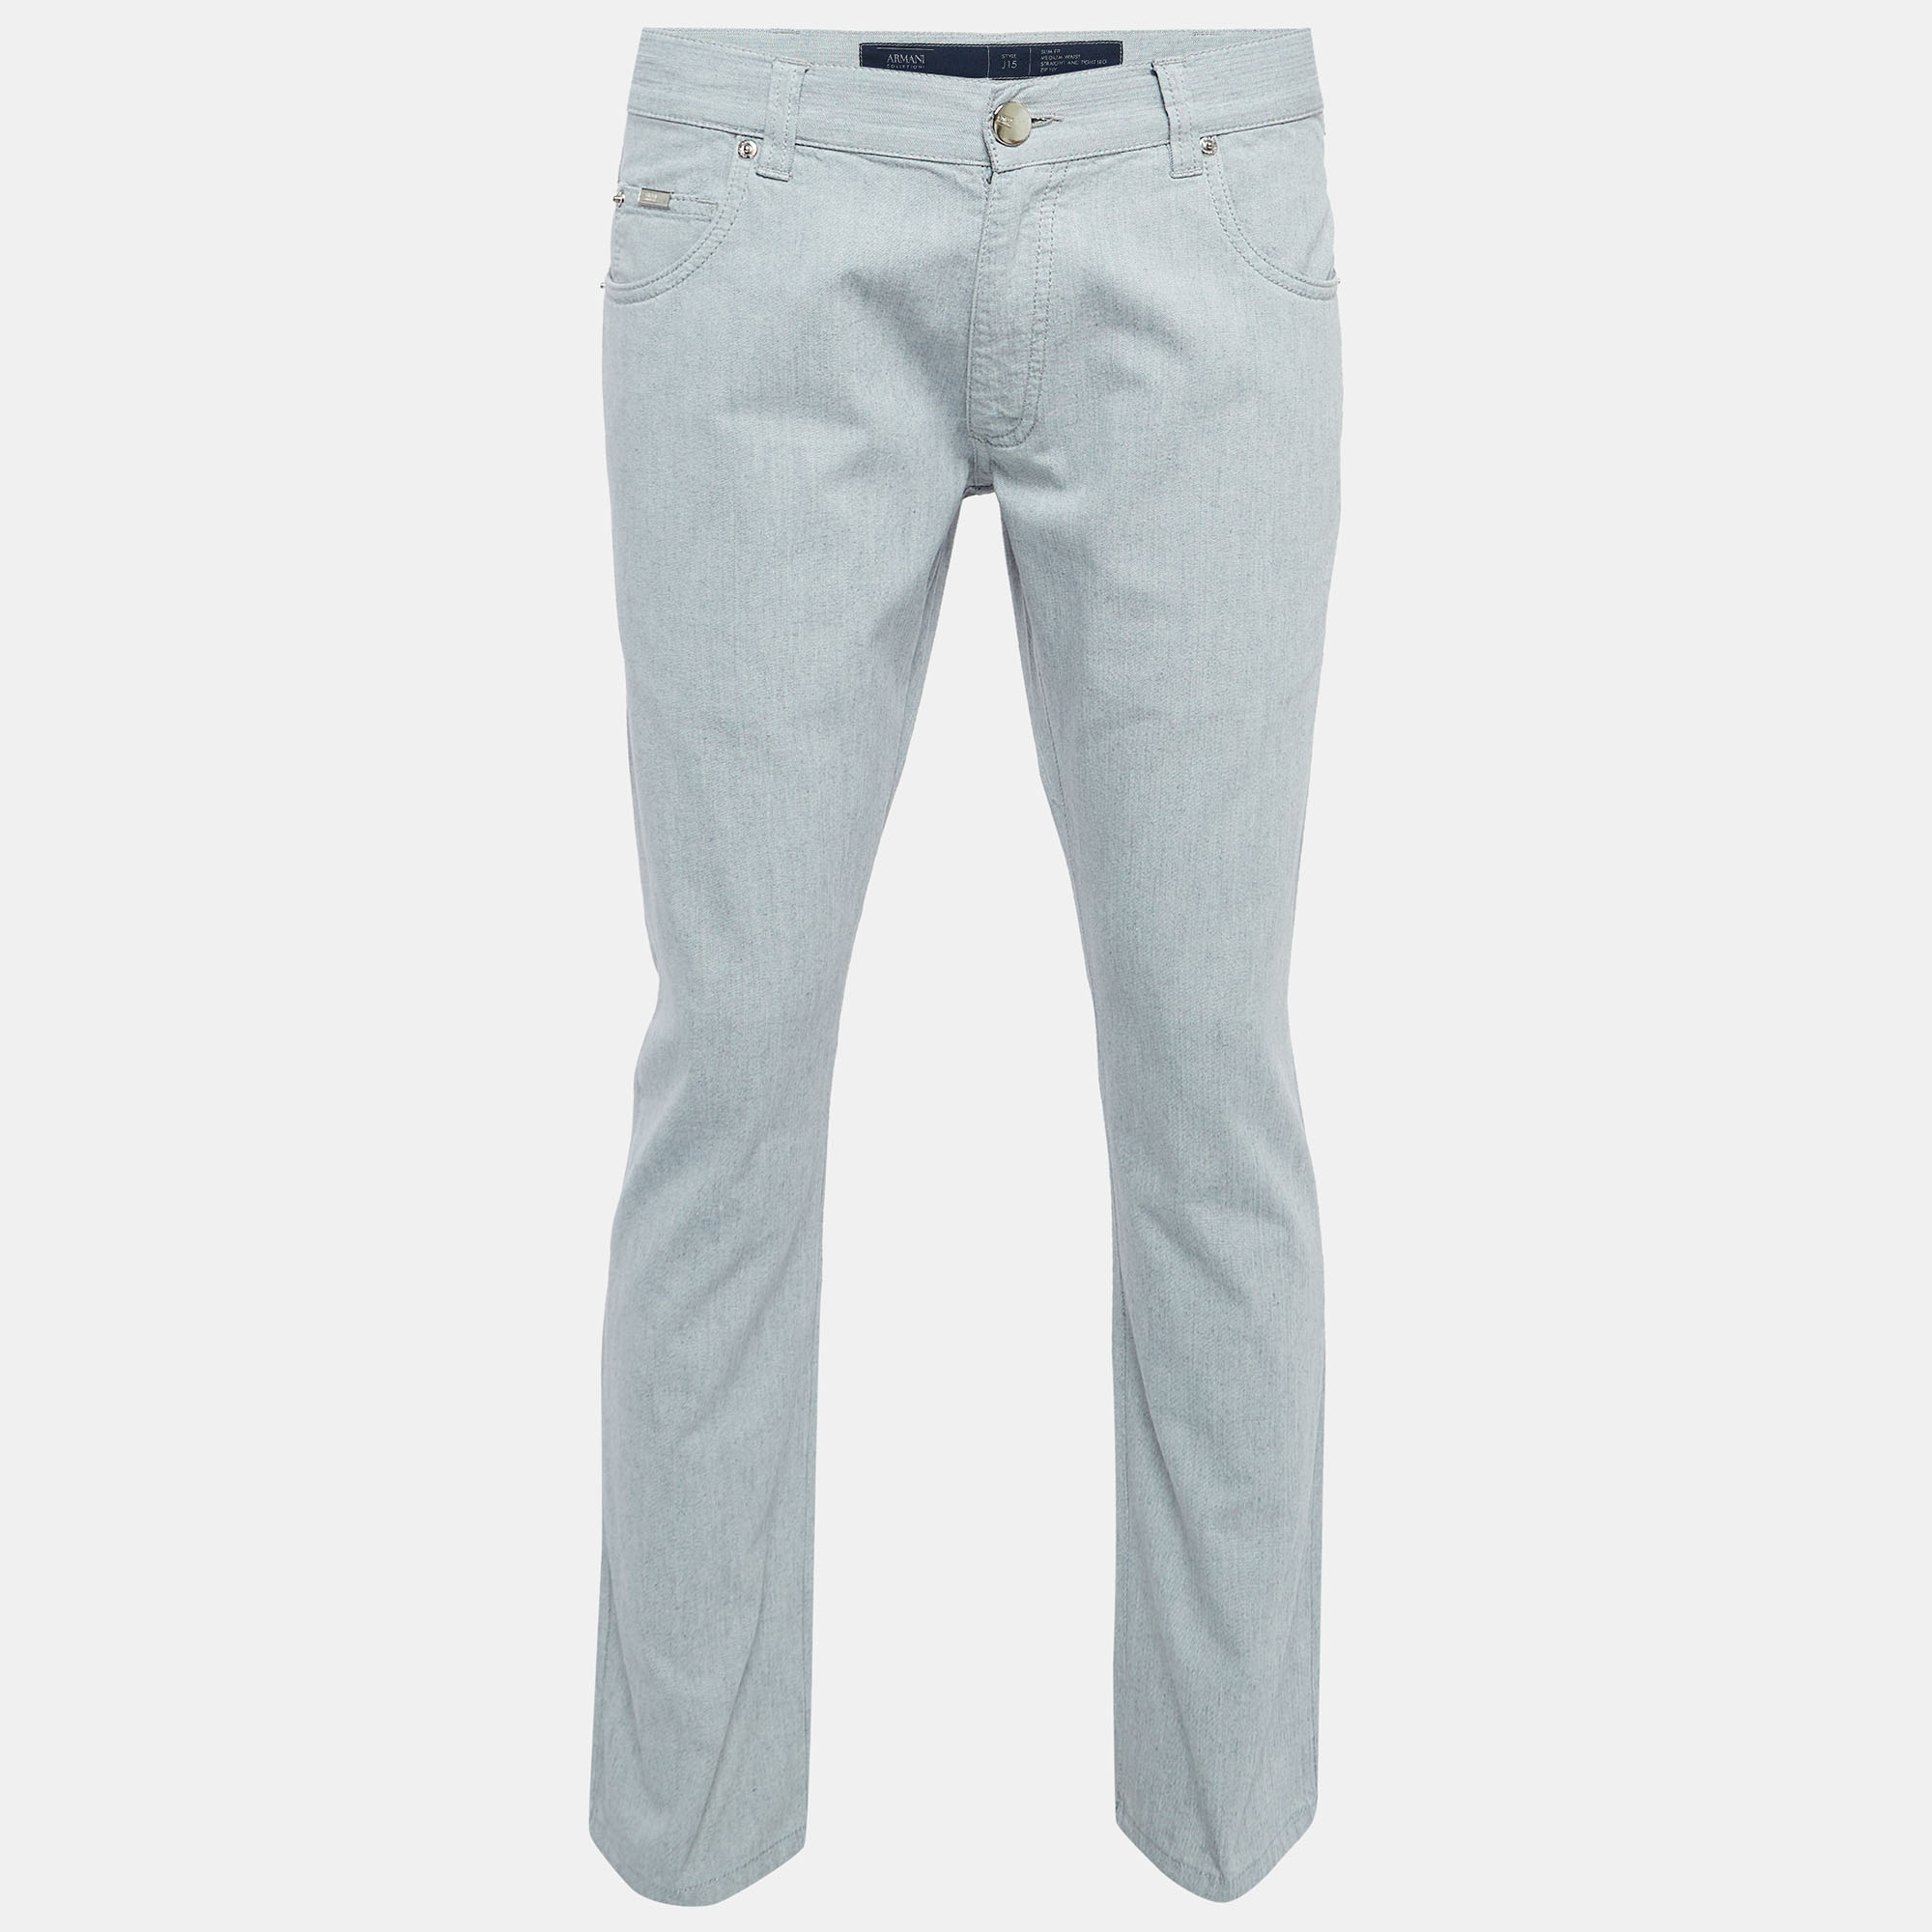 Armani collezioni light blue denim slim fit jeans l waist 34''